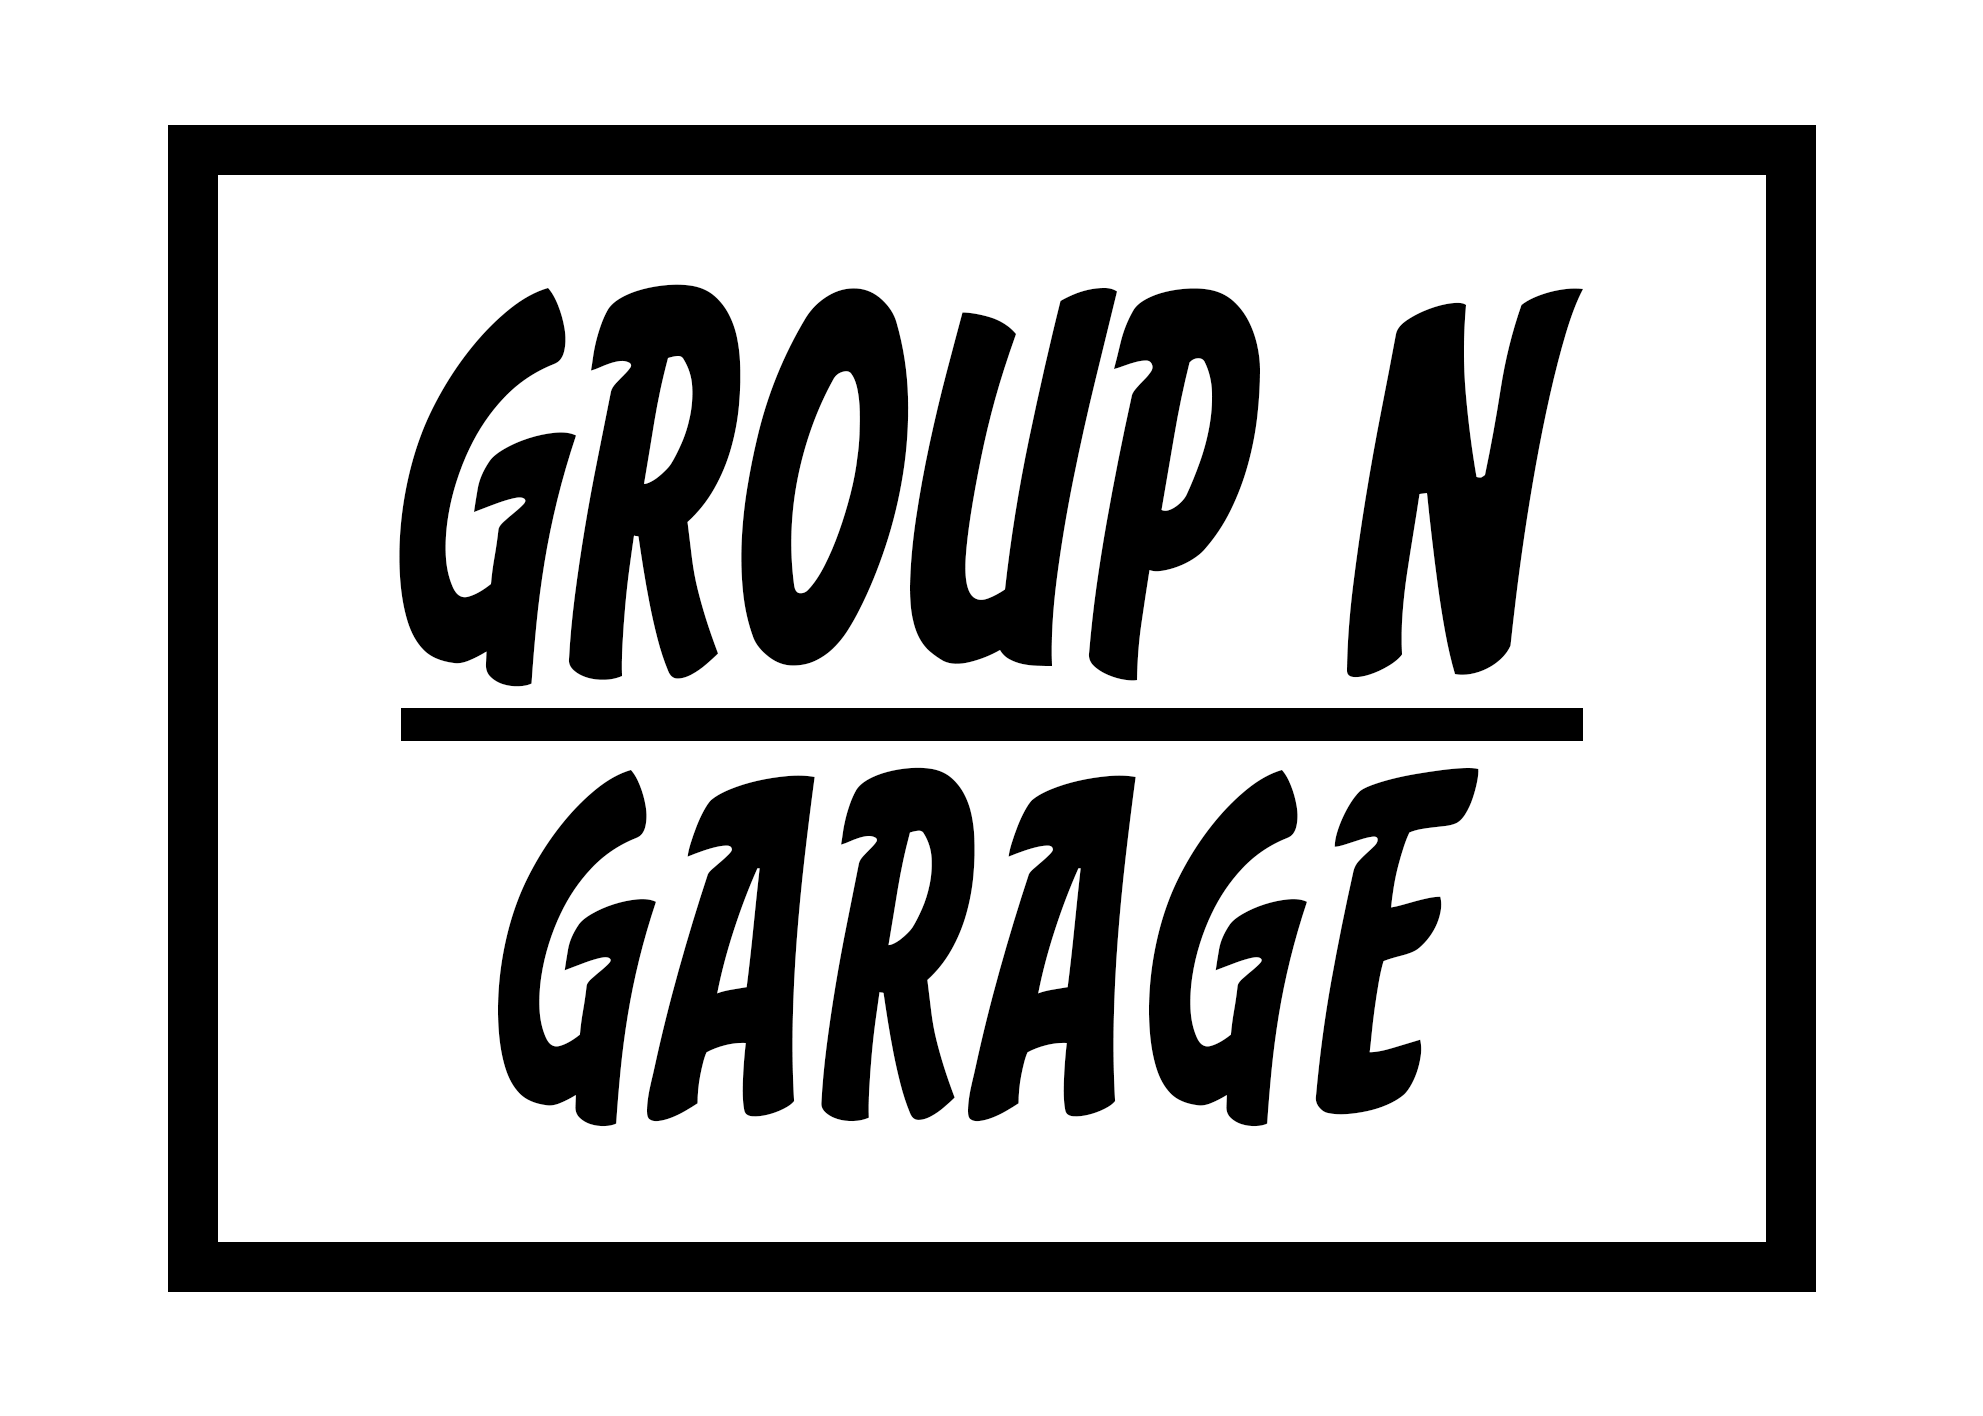 Group N Garage